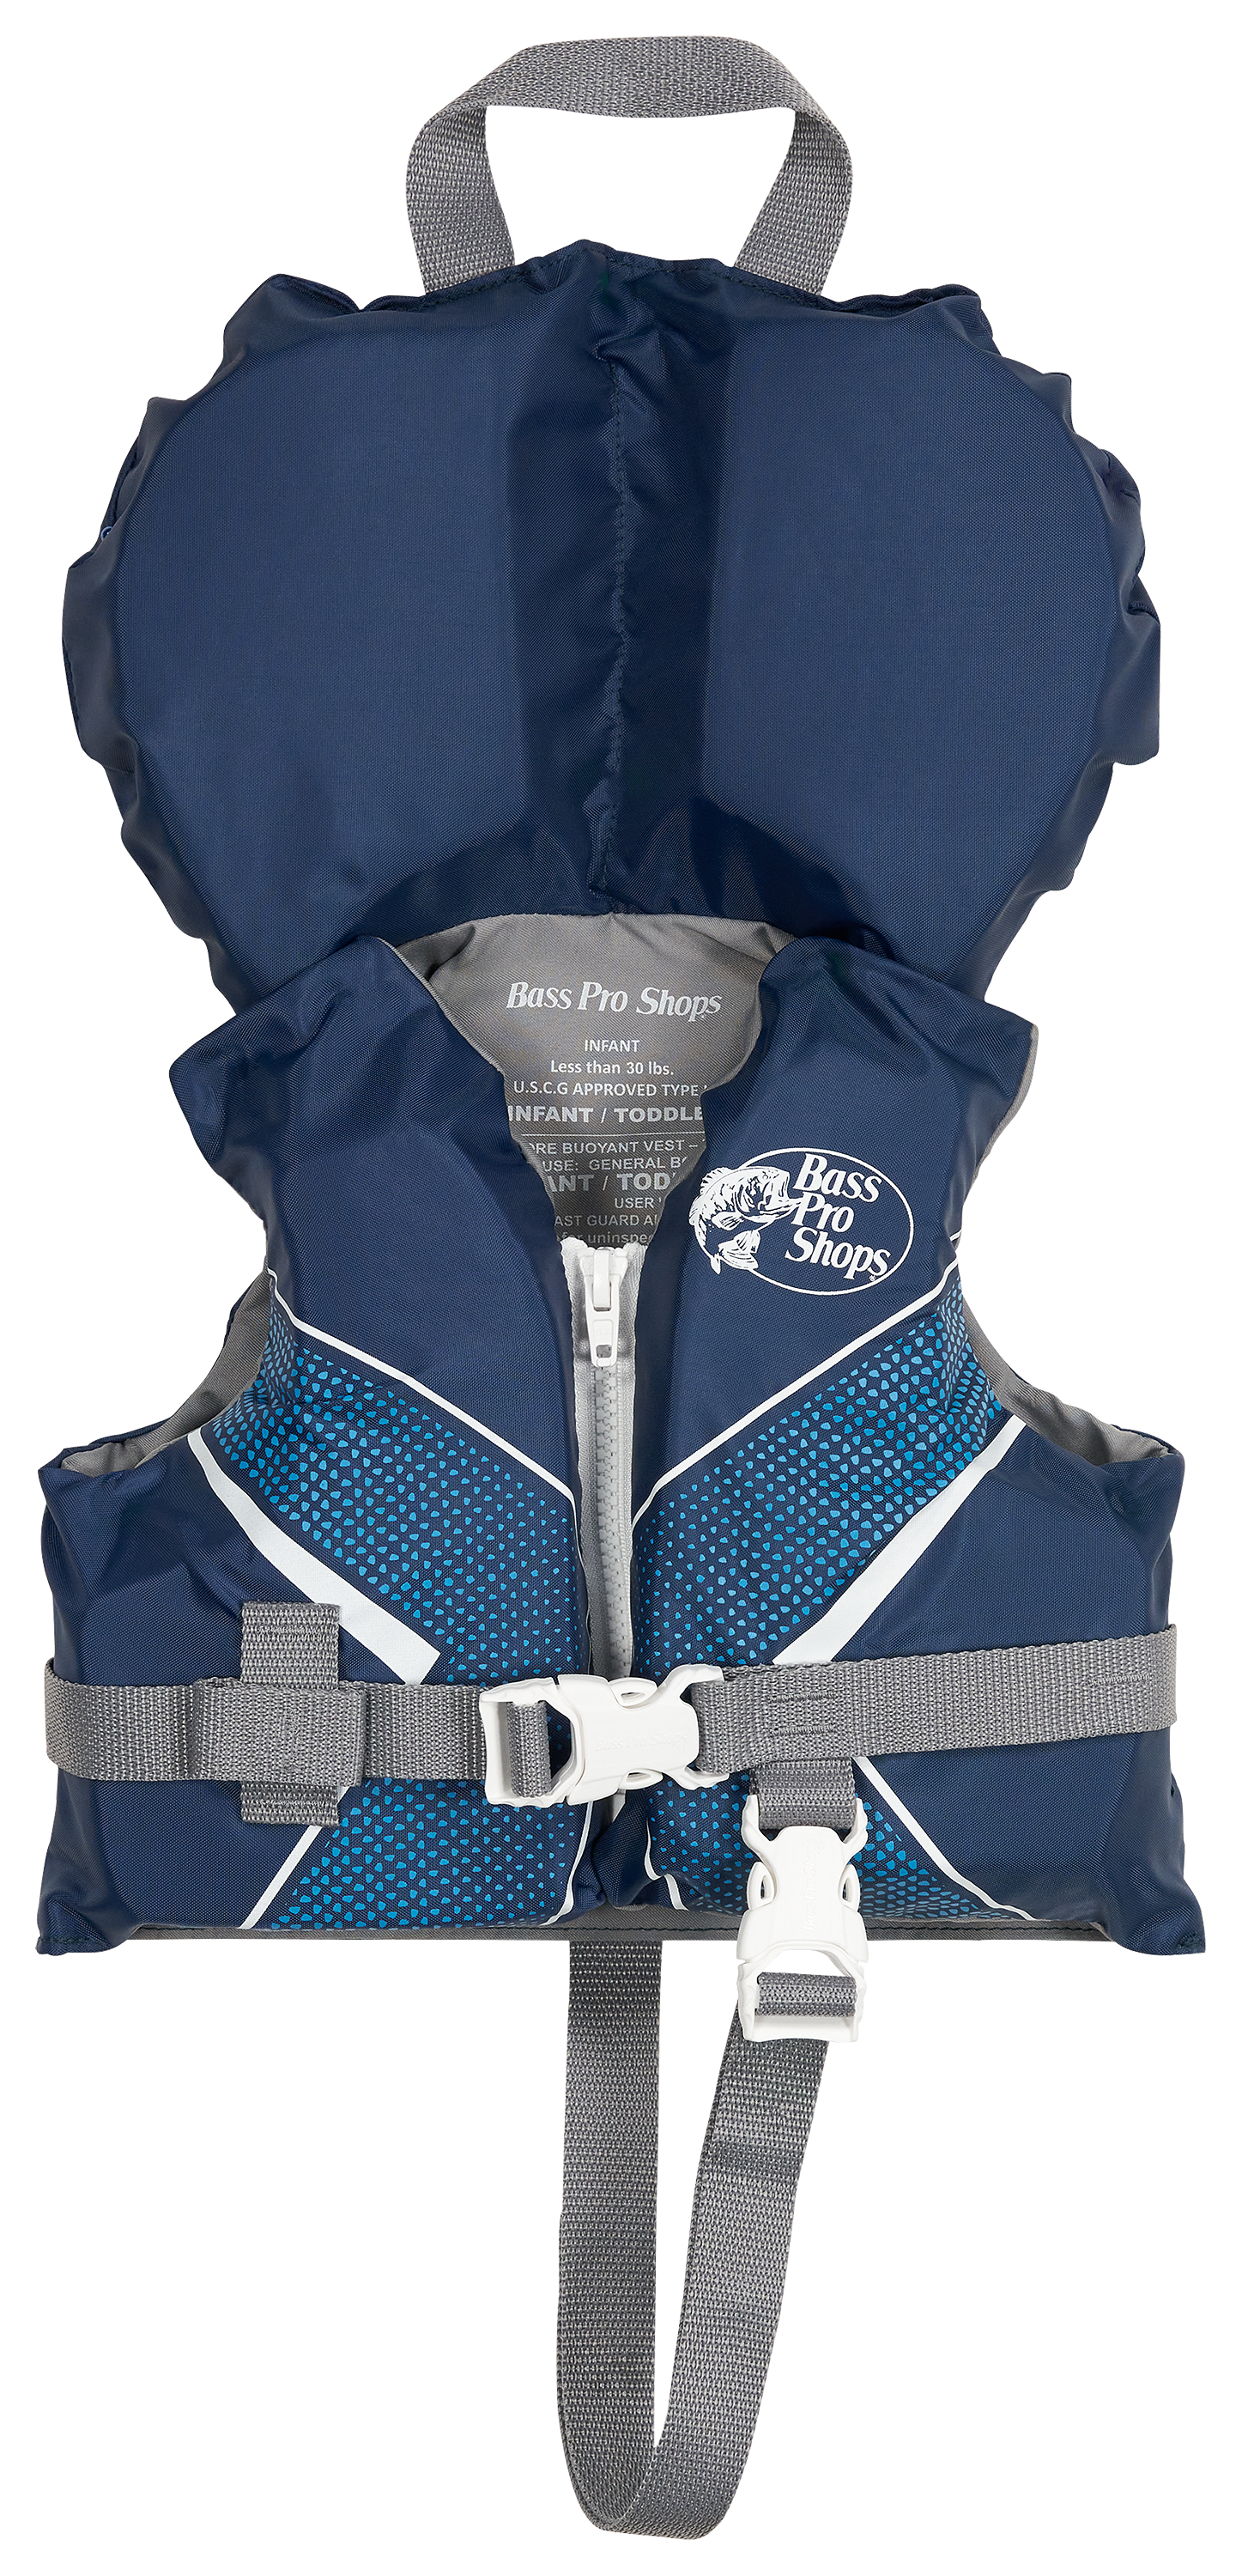 Bass Pro Shops Recreational Life Vest for Babies